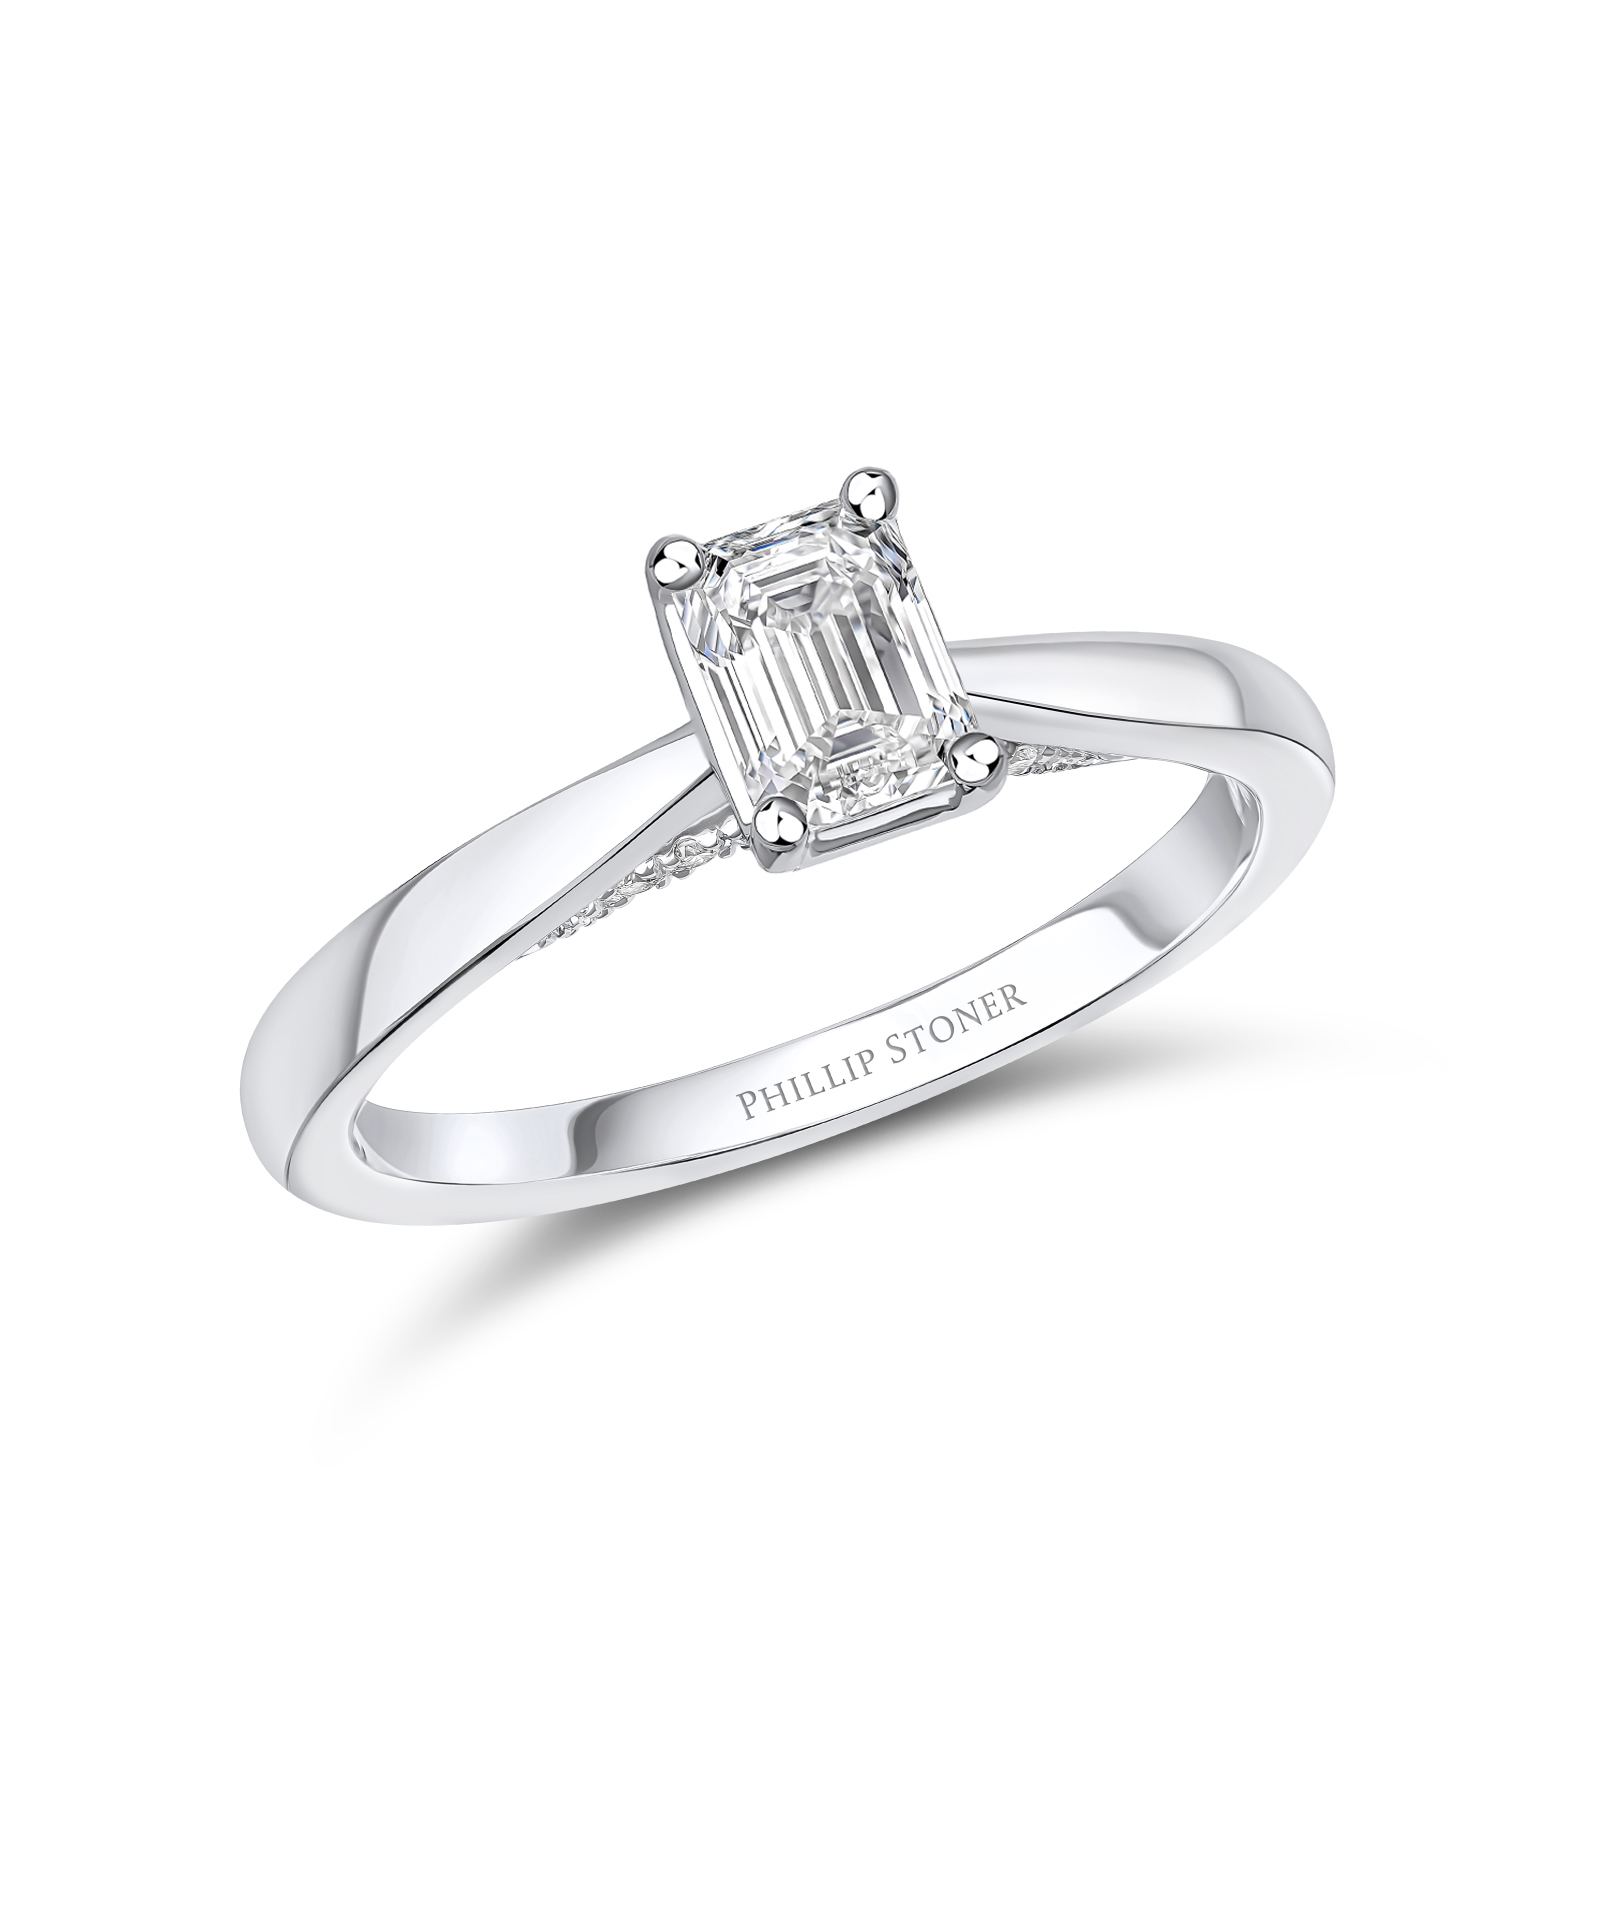 0.70ct Emerald Cut Diamond Engagement Ring with Diamond Under Bezel - Phillip Stoner The Jeweller